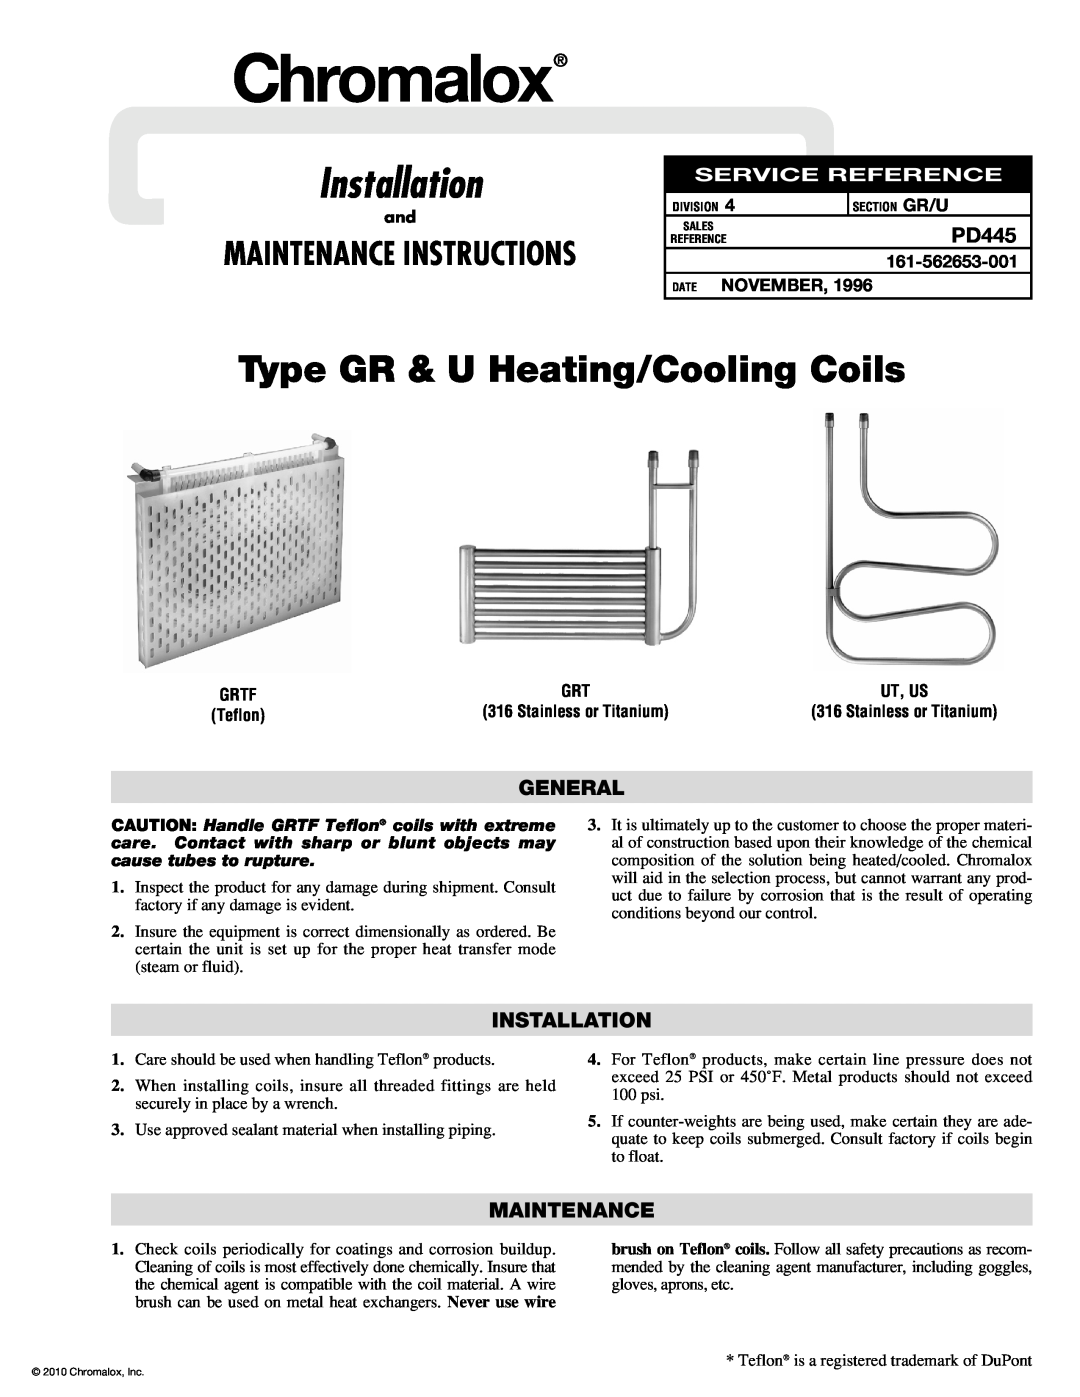 Chromalox PD445 manual 161-562653-001, Date November, Chromalox, Installation, Type GR & U Heating/Cooling Coils, General 